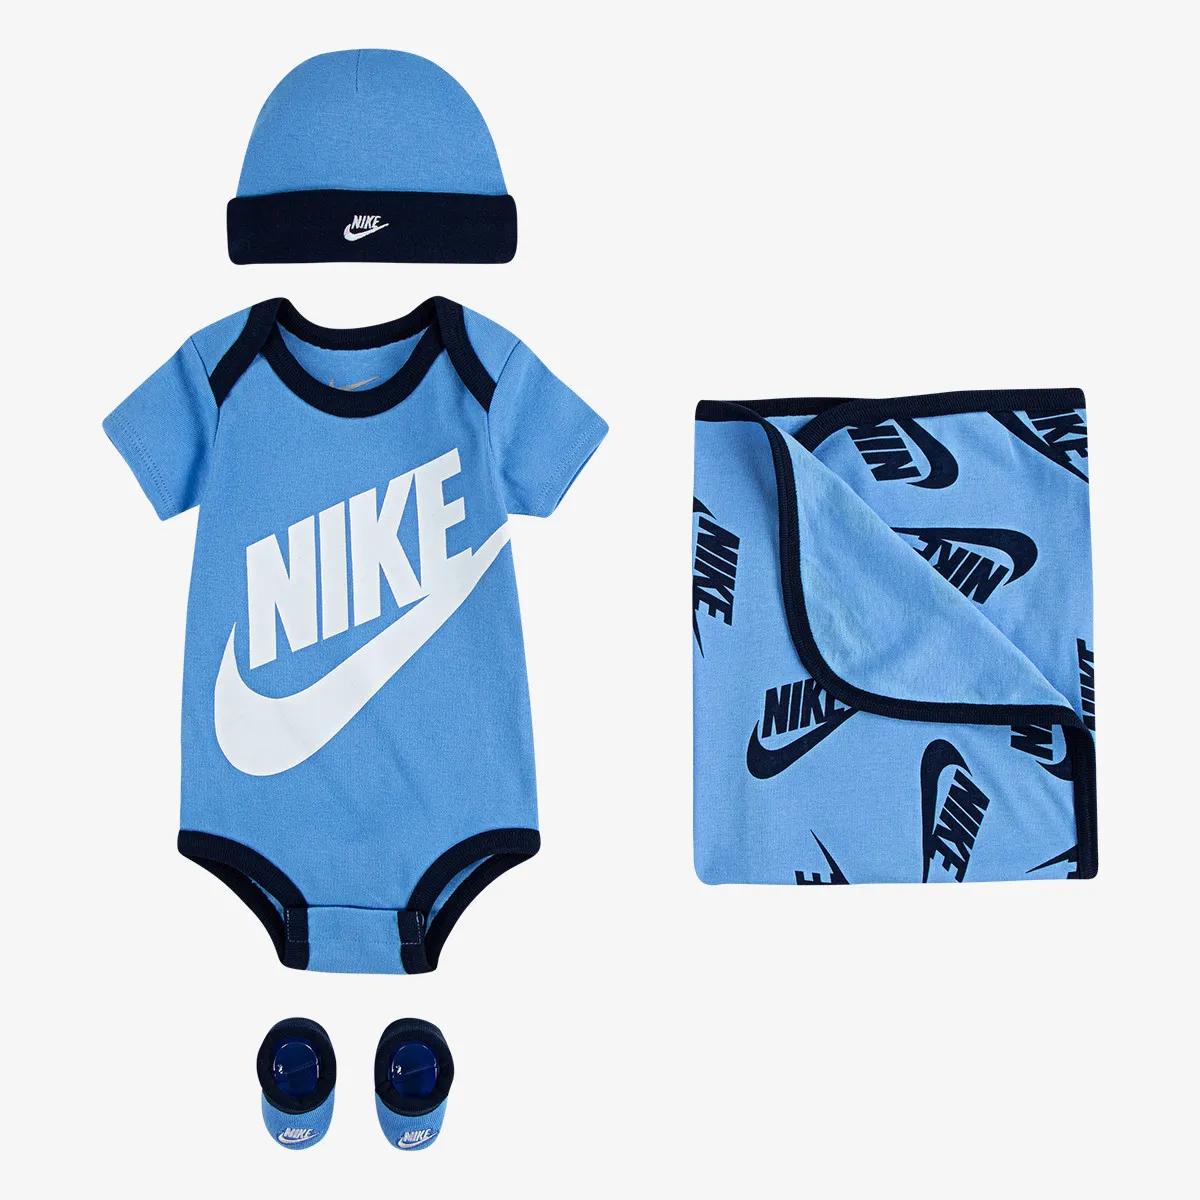 Nike Set Bodysuit and Blanket Set 